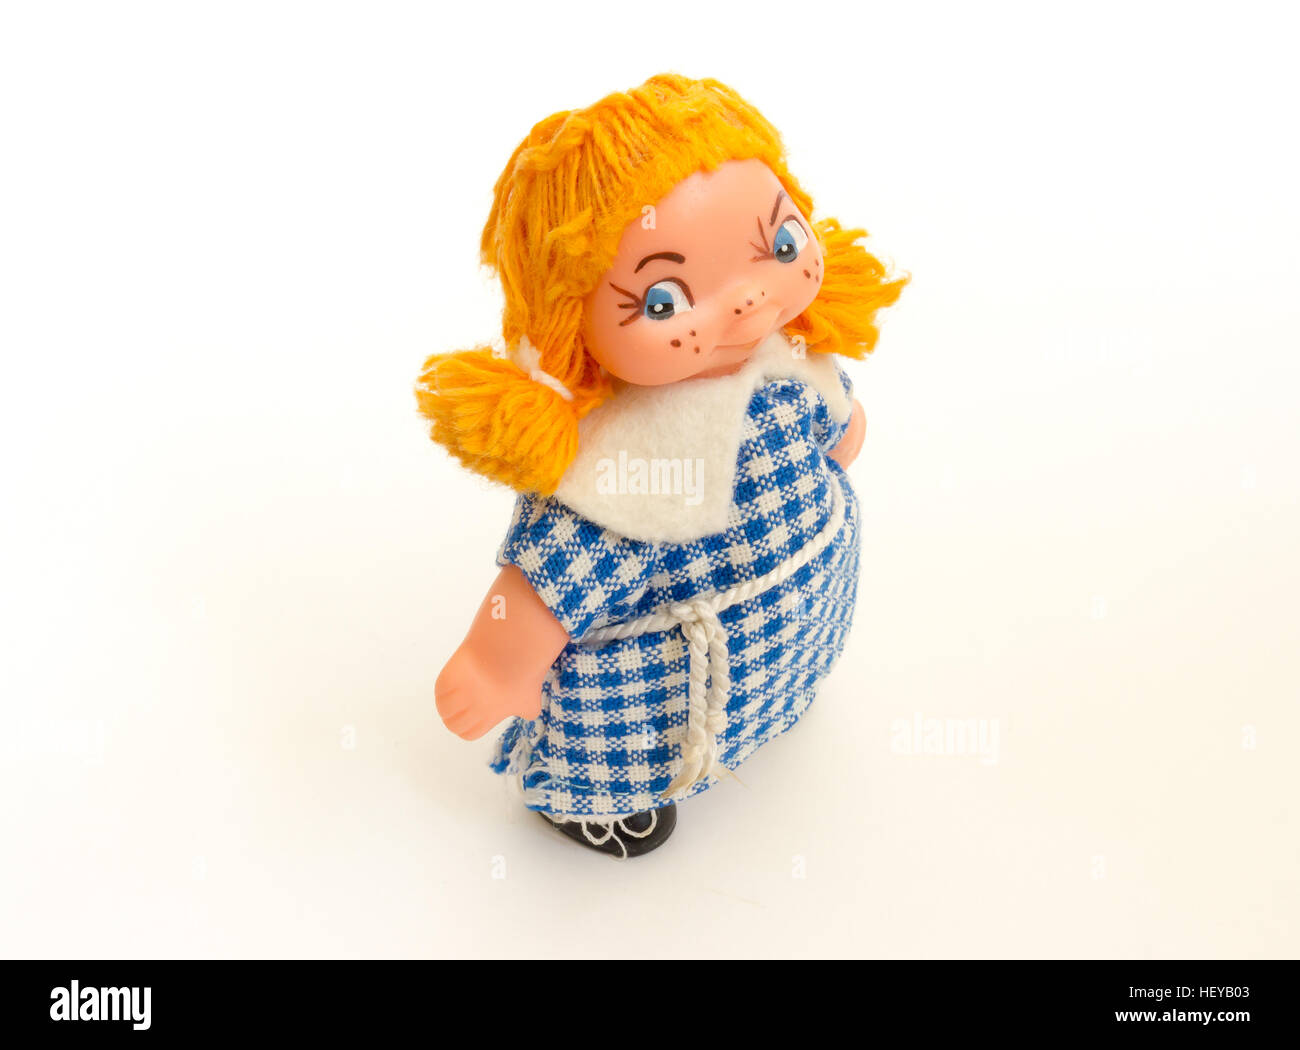 The Miniature toy girl. Stock Photo